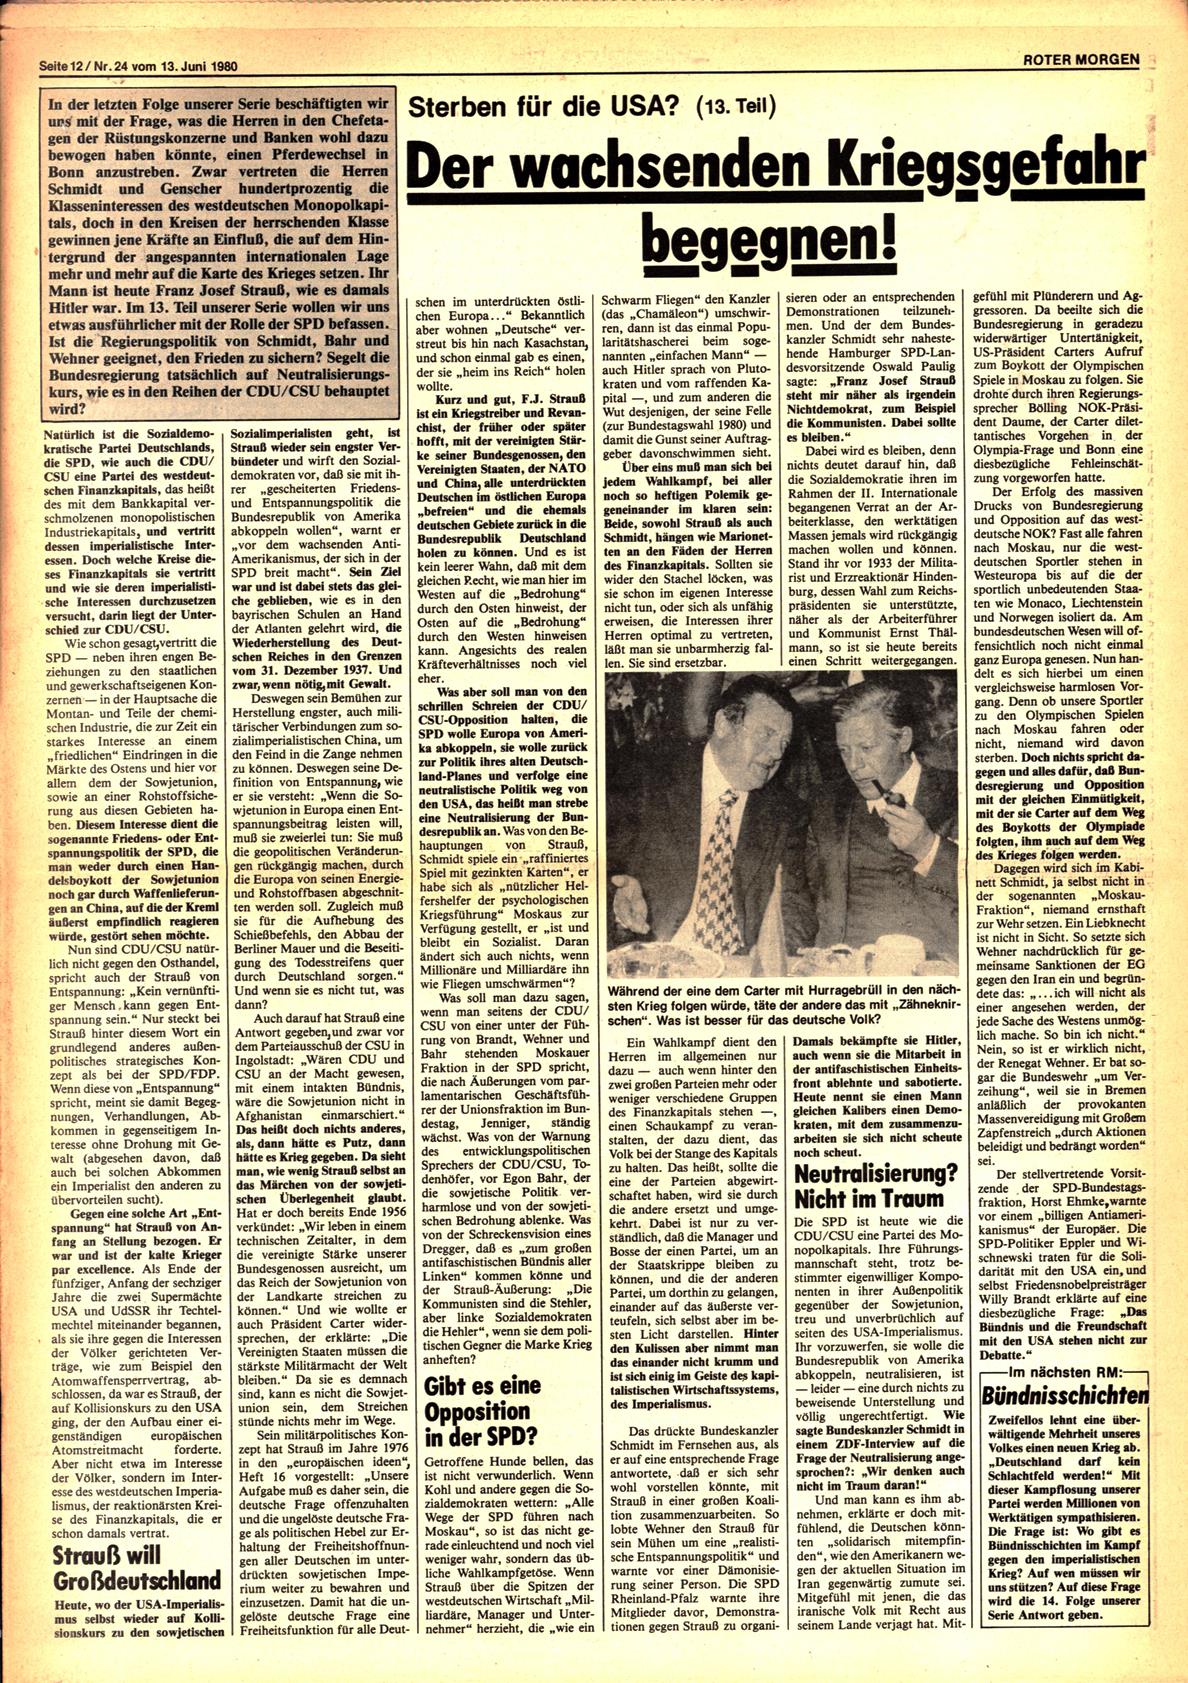 Roter Morgen, 14. Jg., 13. Juni 1980, Nr. 24, Seite 12